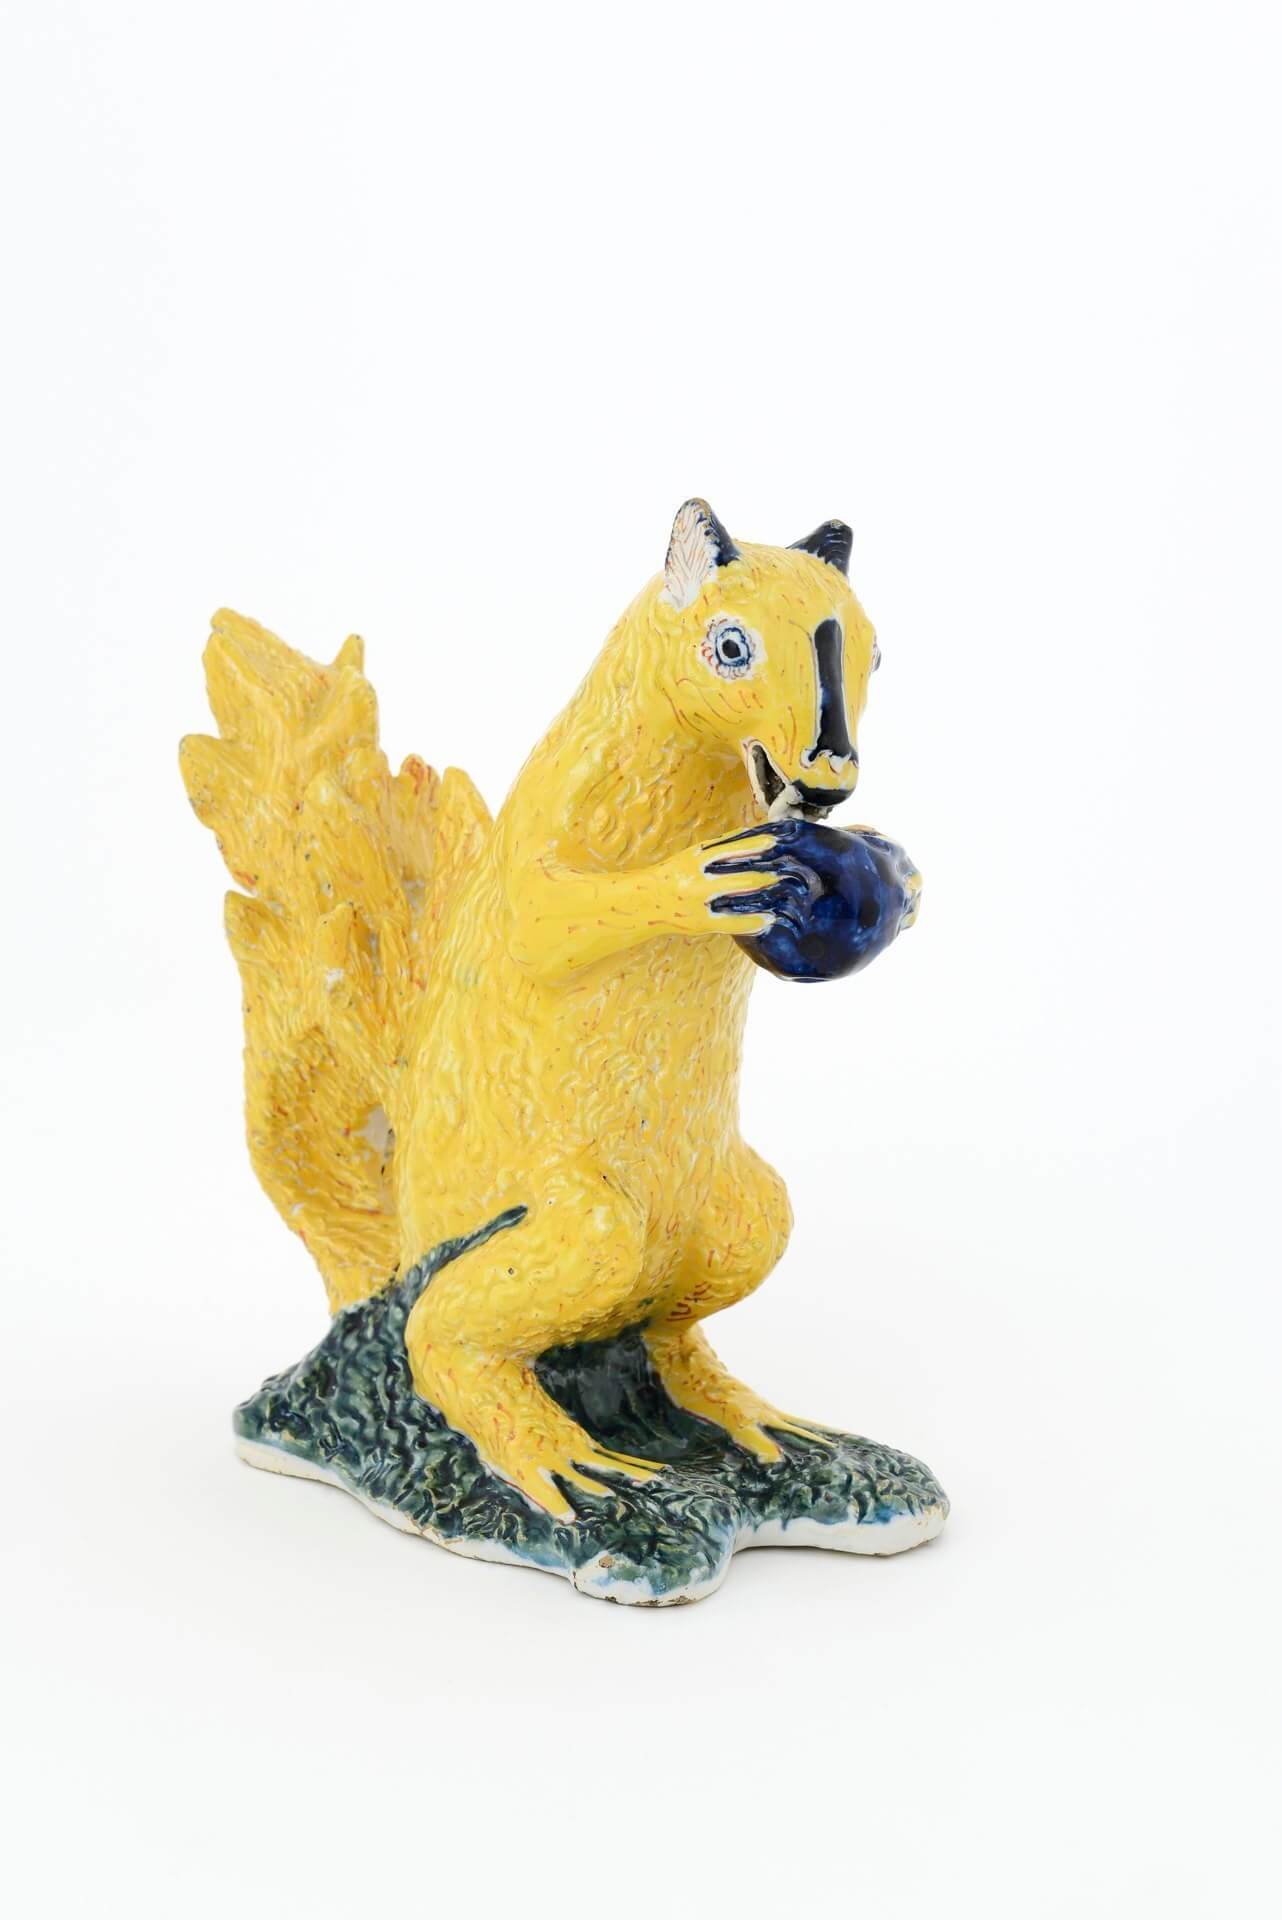 Antique Delft pottery polychrome figurine of a squirrel